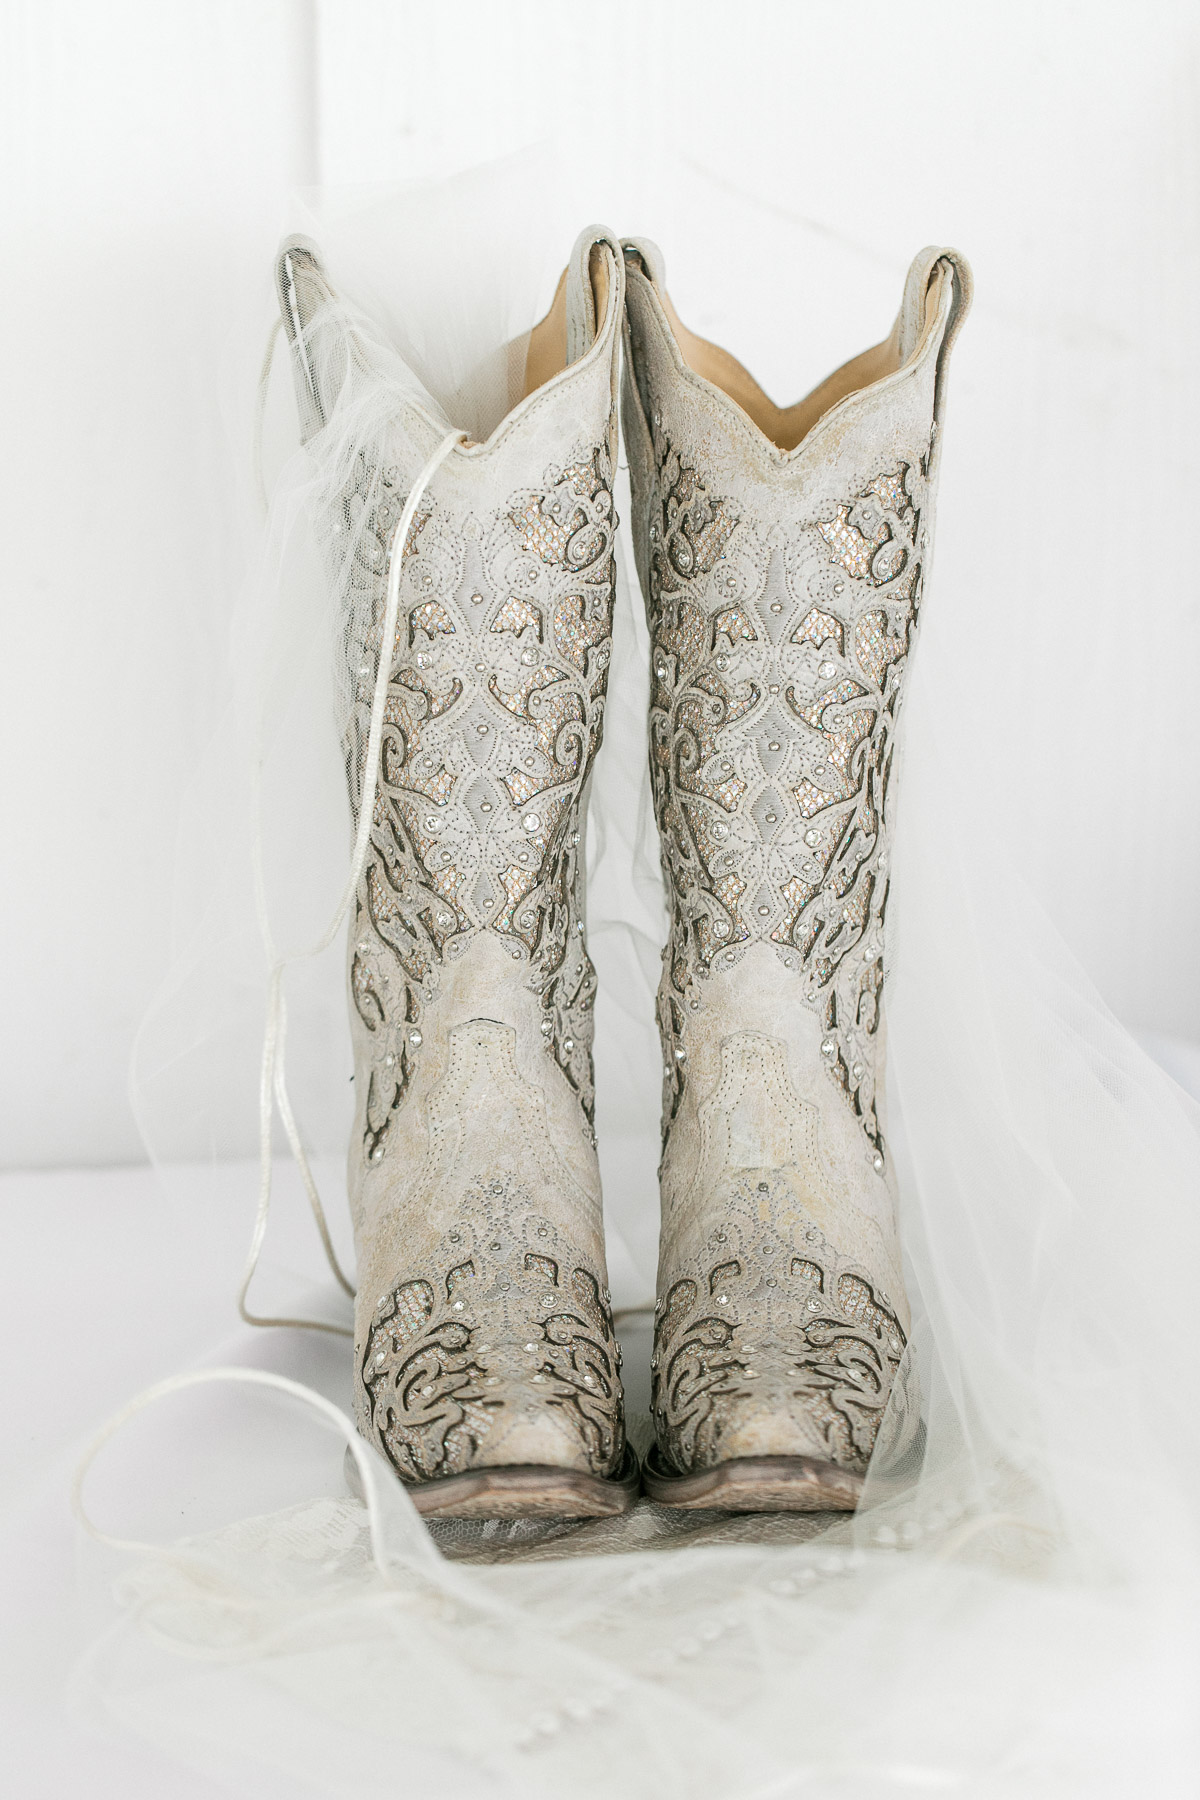 Custom wedding cowgirl boots